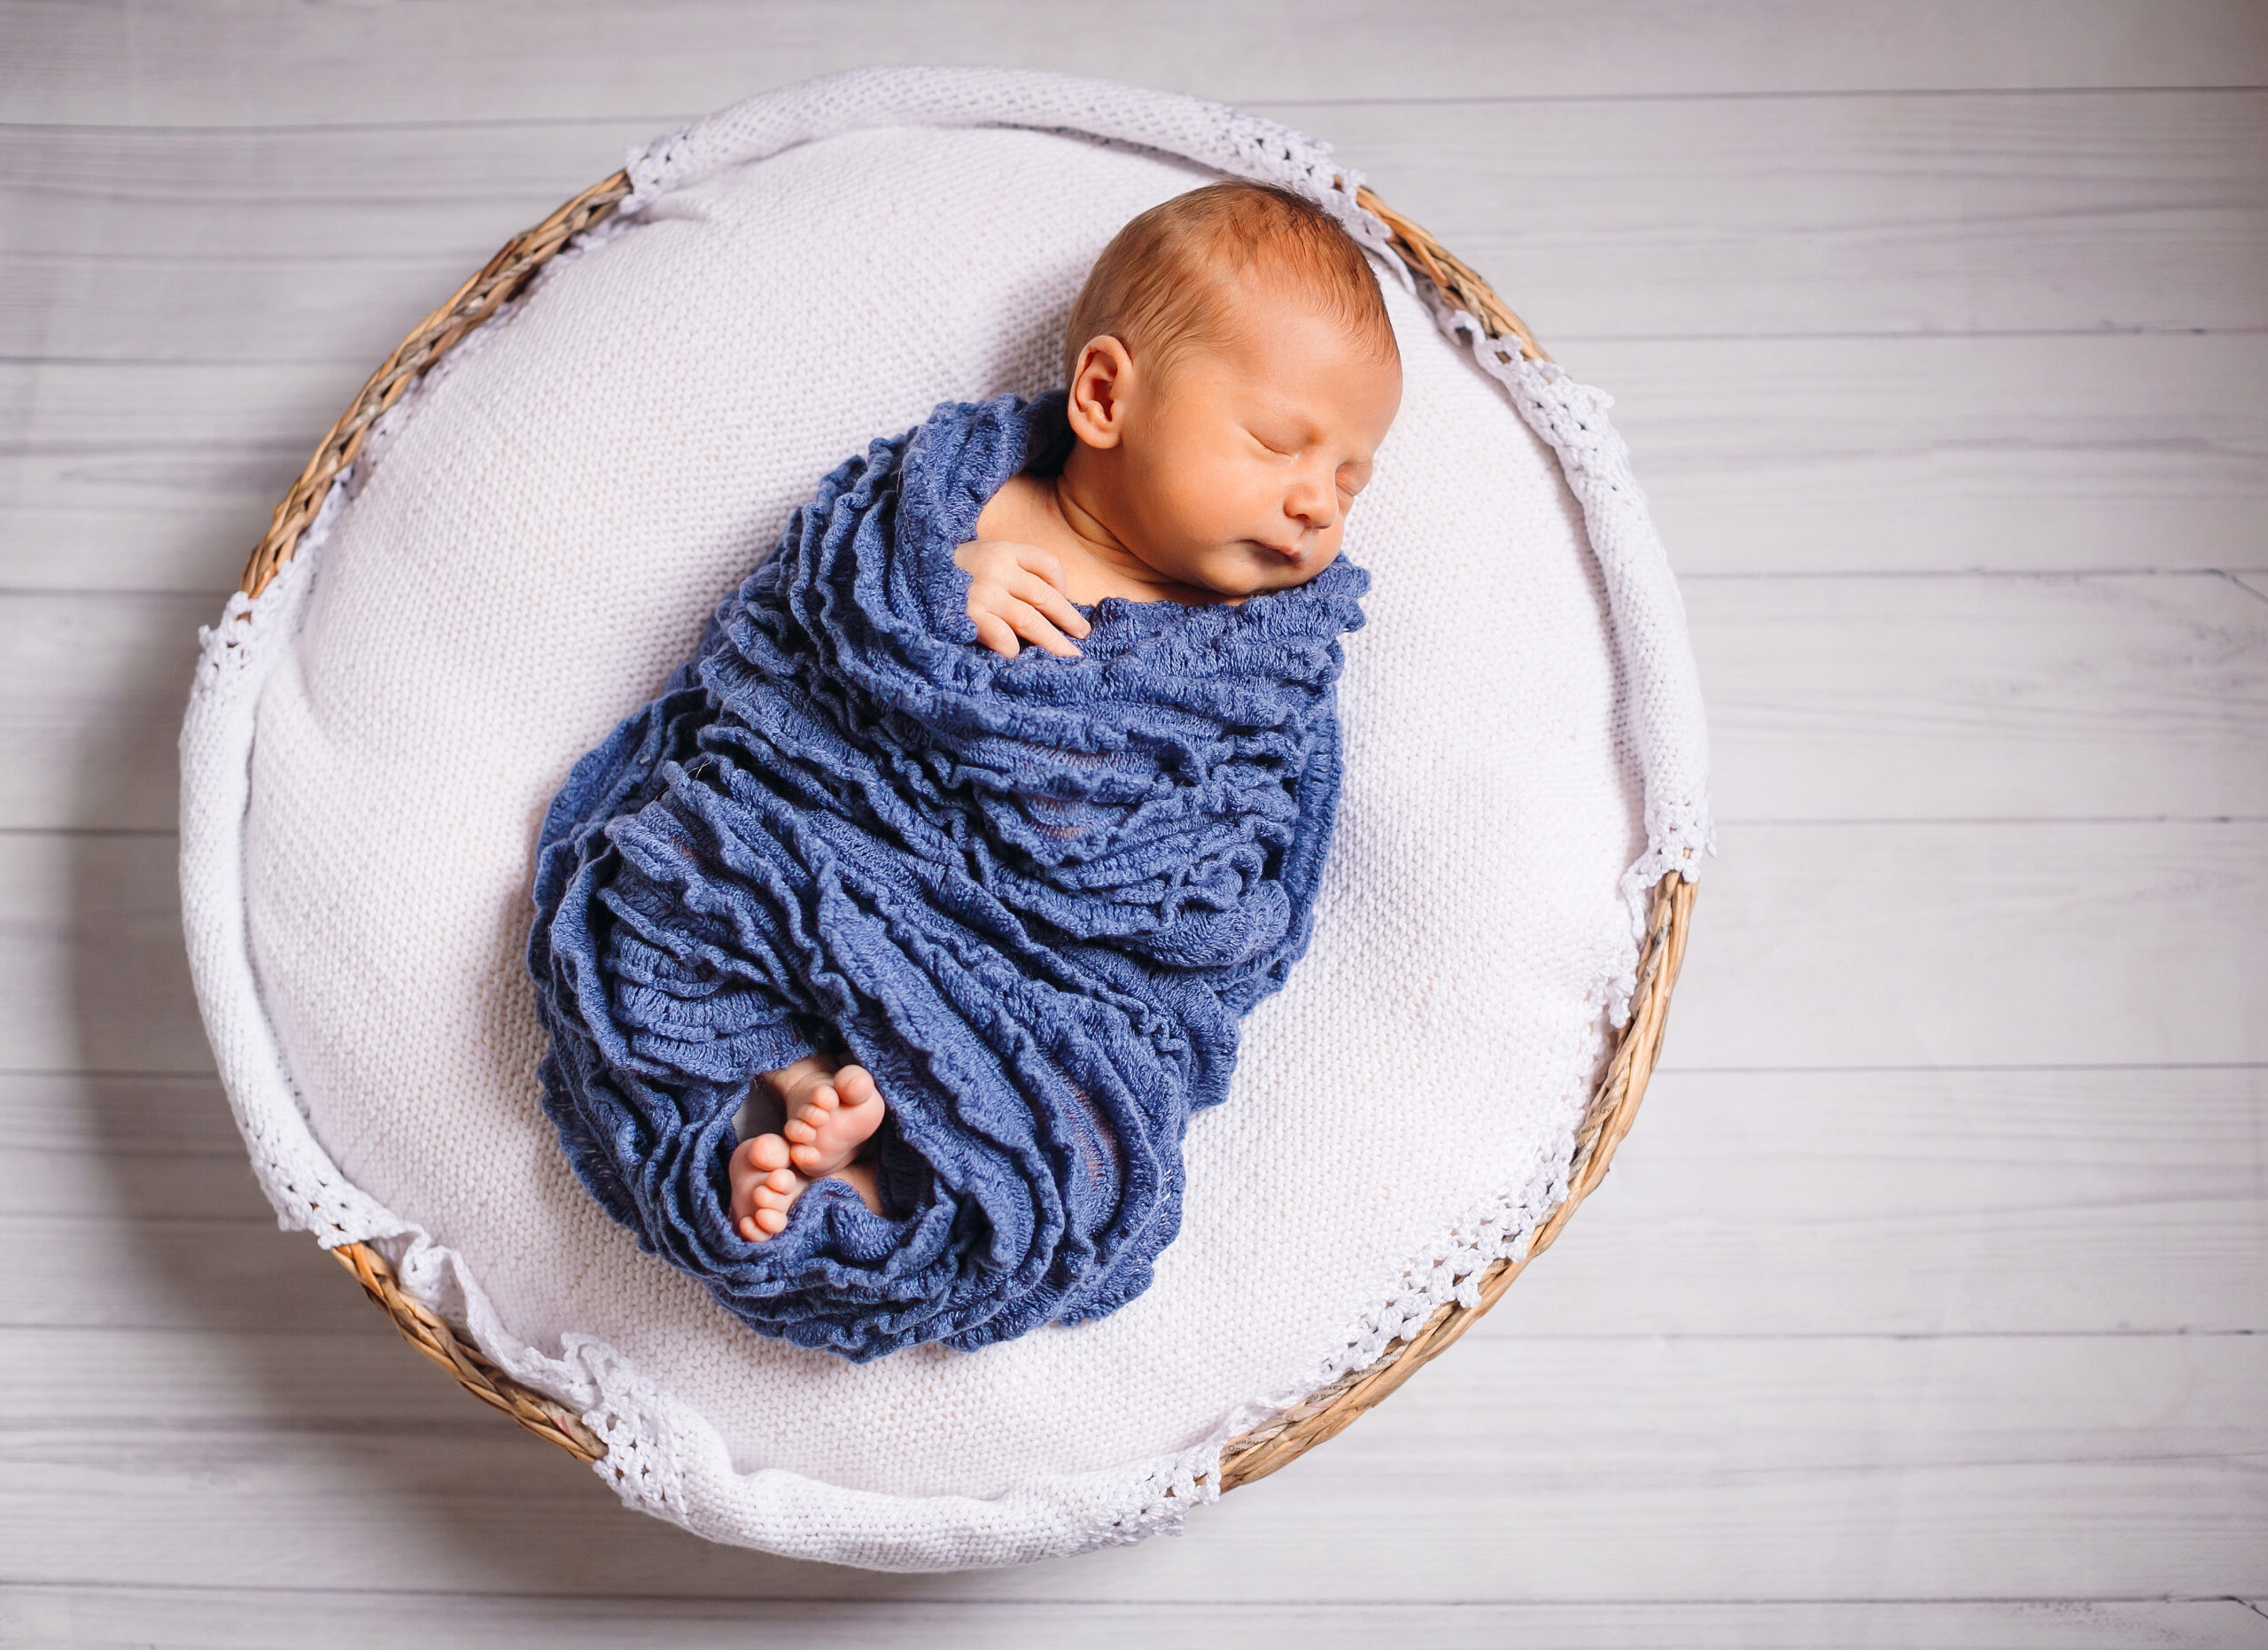 Newborn baby enveloped in blue scarf sleeps on white pillow